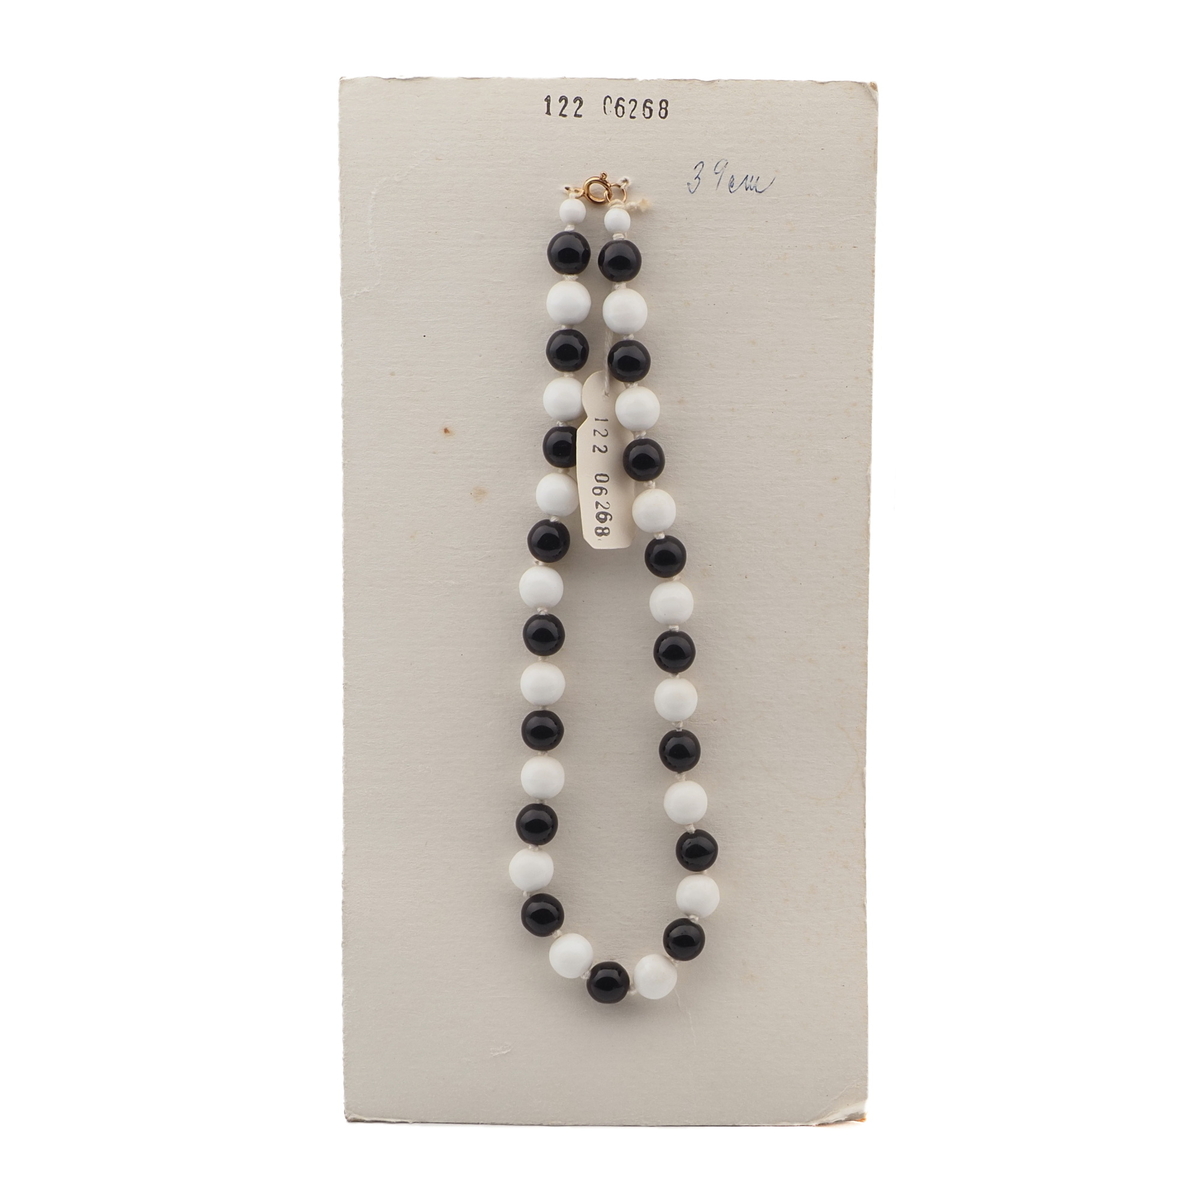 Vintage Czech necklace black white glass beads 15"